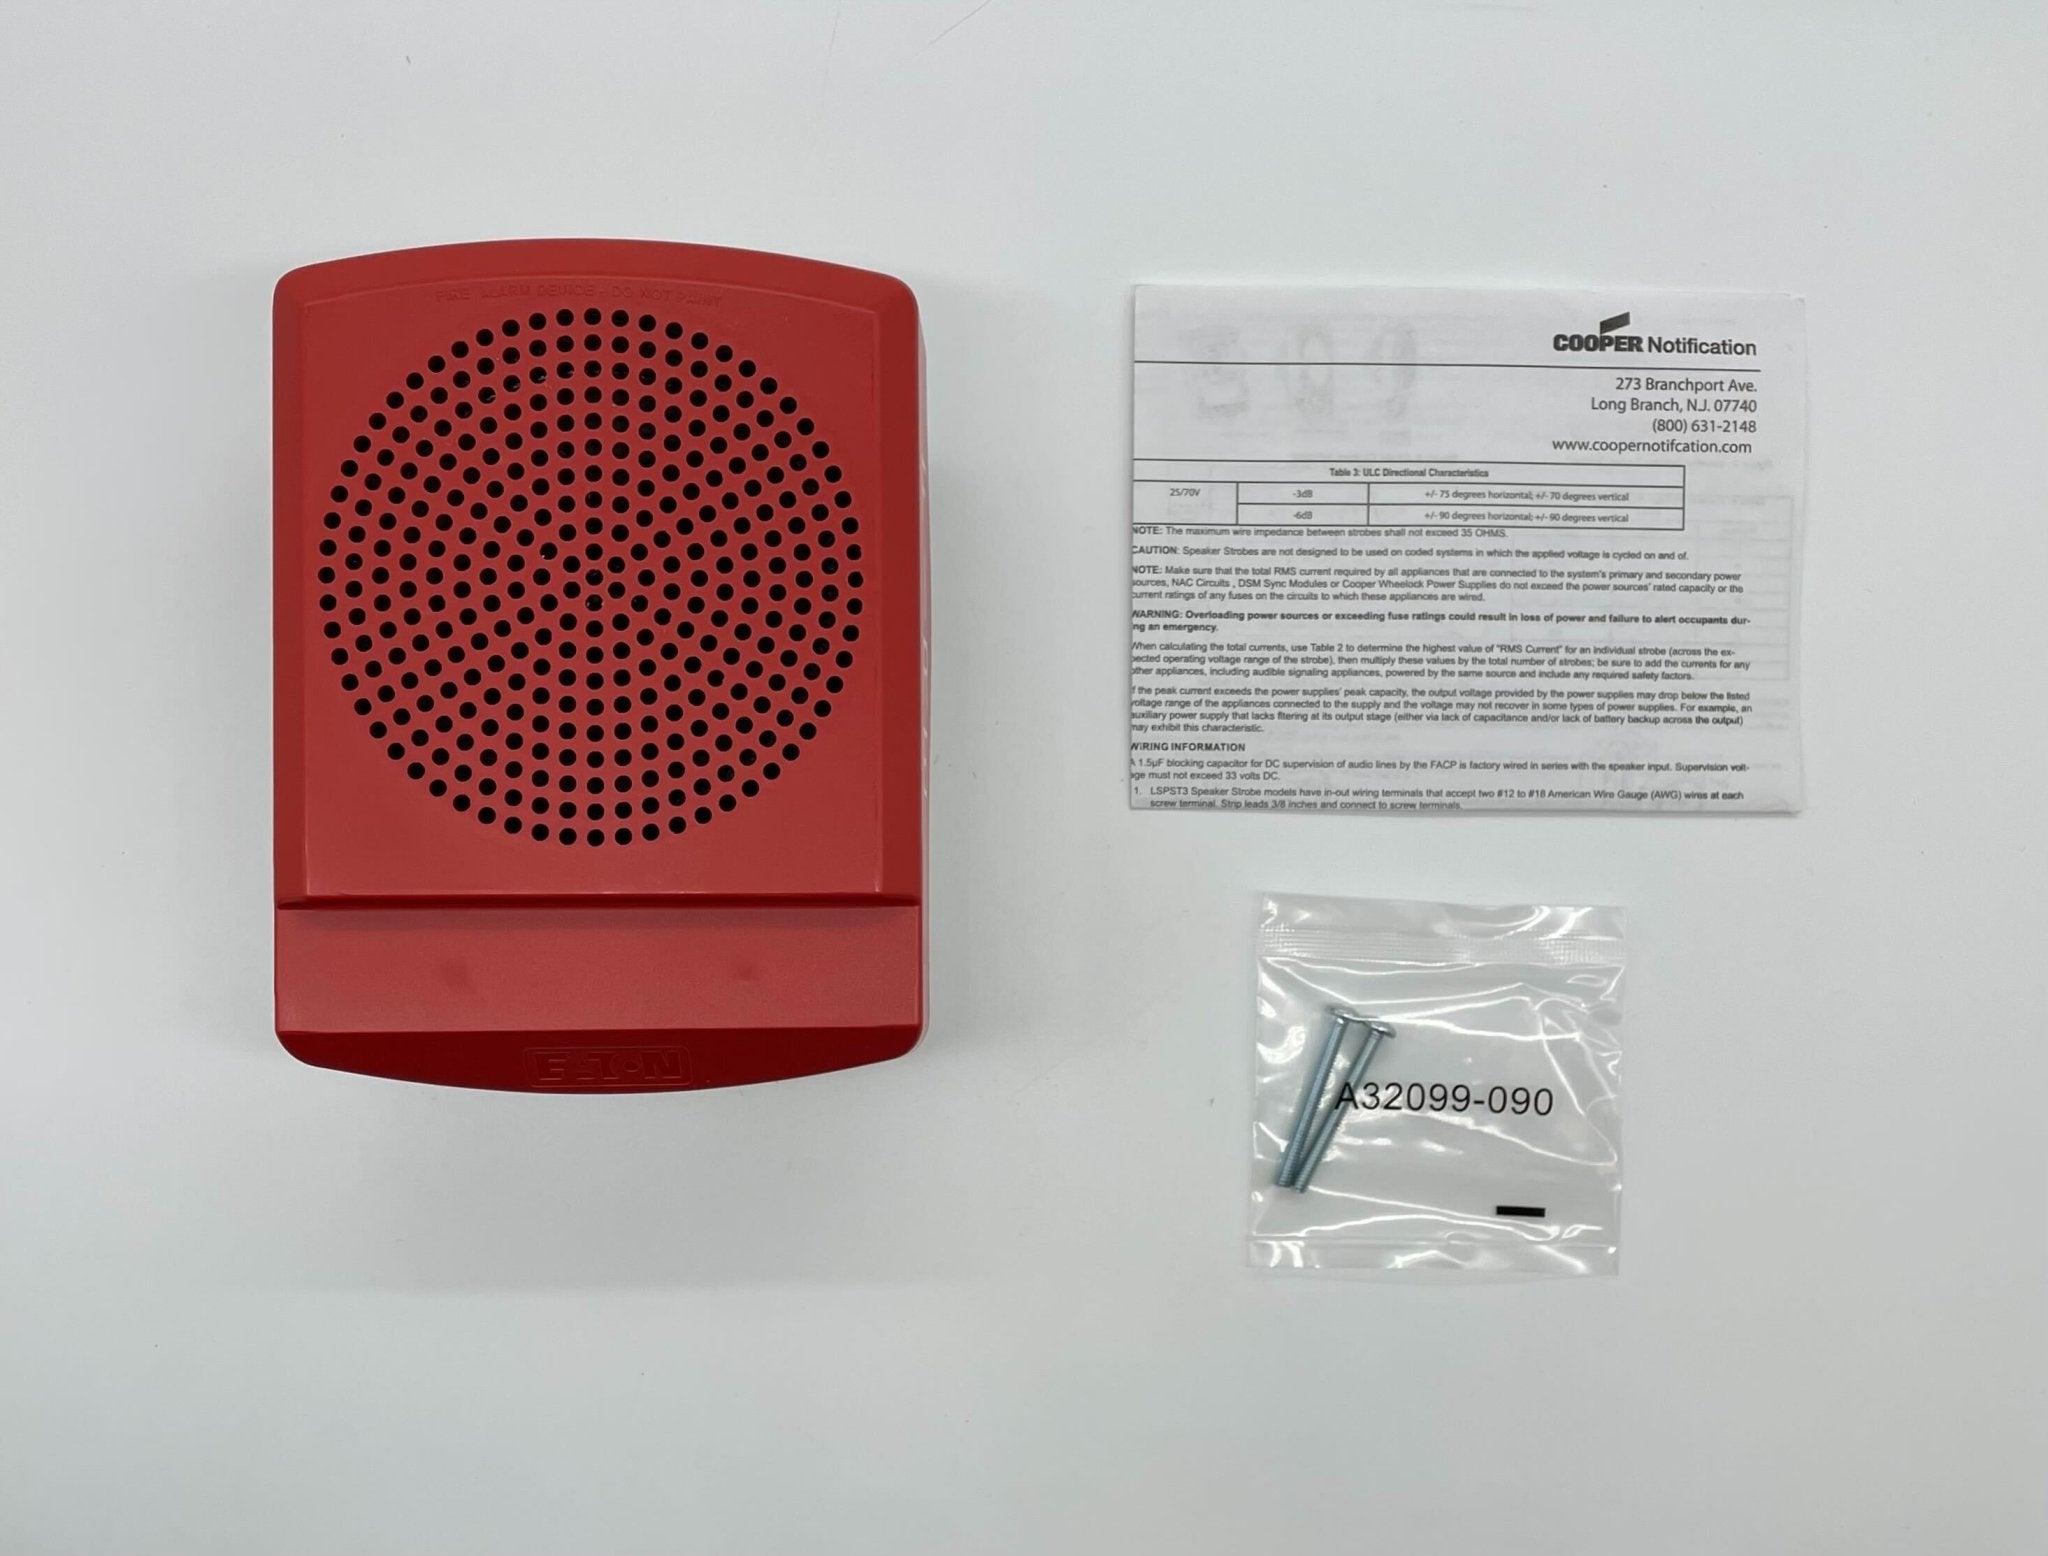 Wheelock LSPKR - The Fire Alarm Supplier